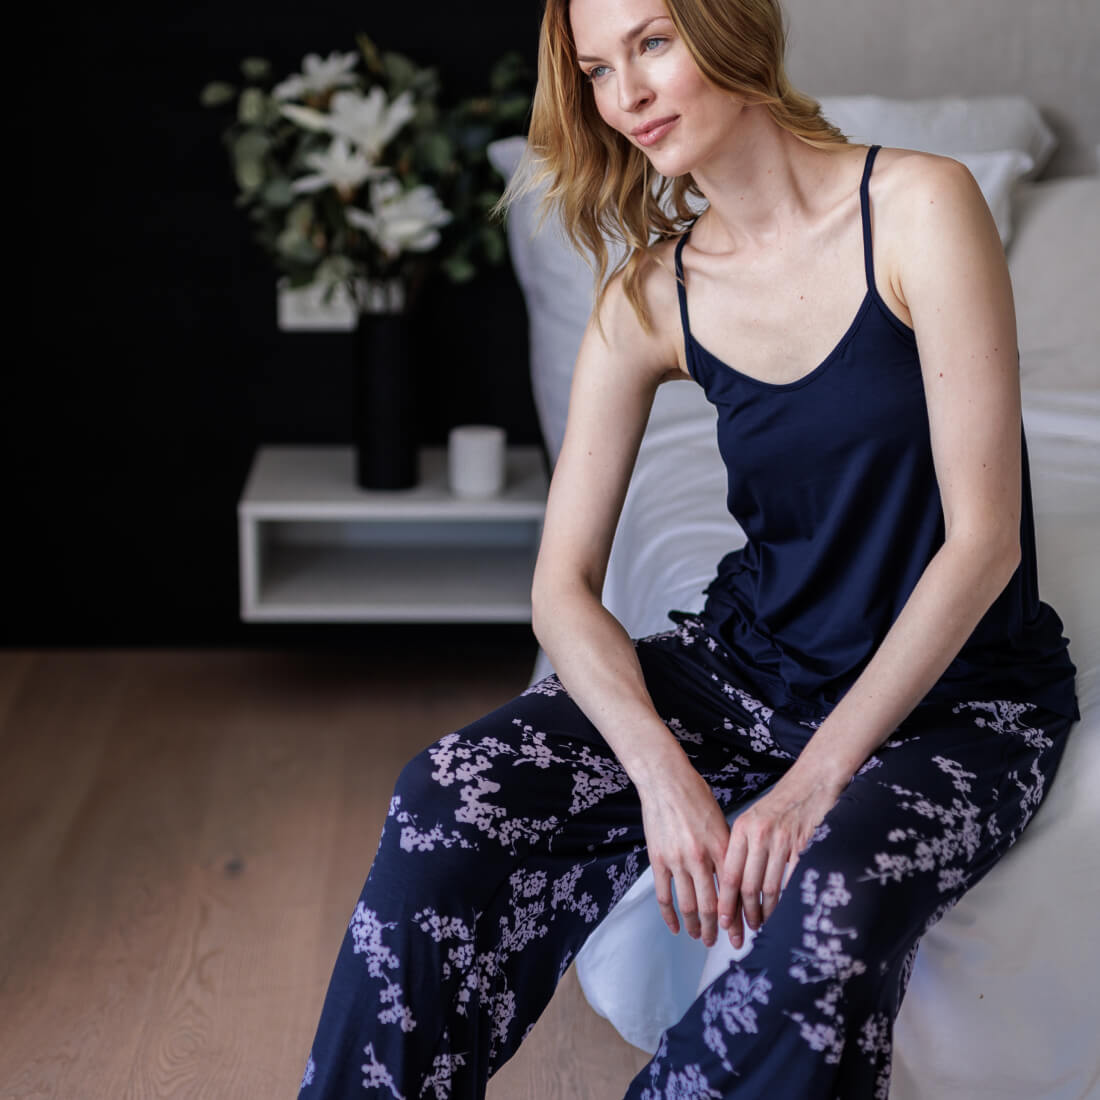 Women's Flannel Pajama Pants | Duluth Trading Company